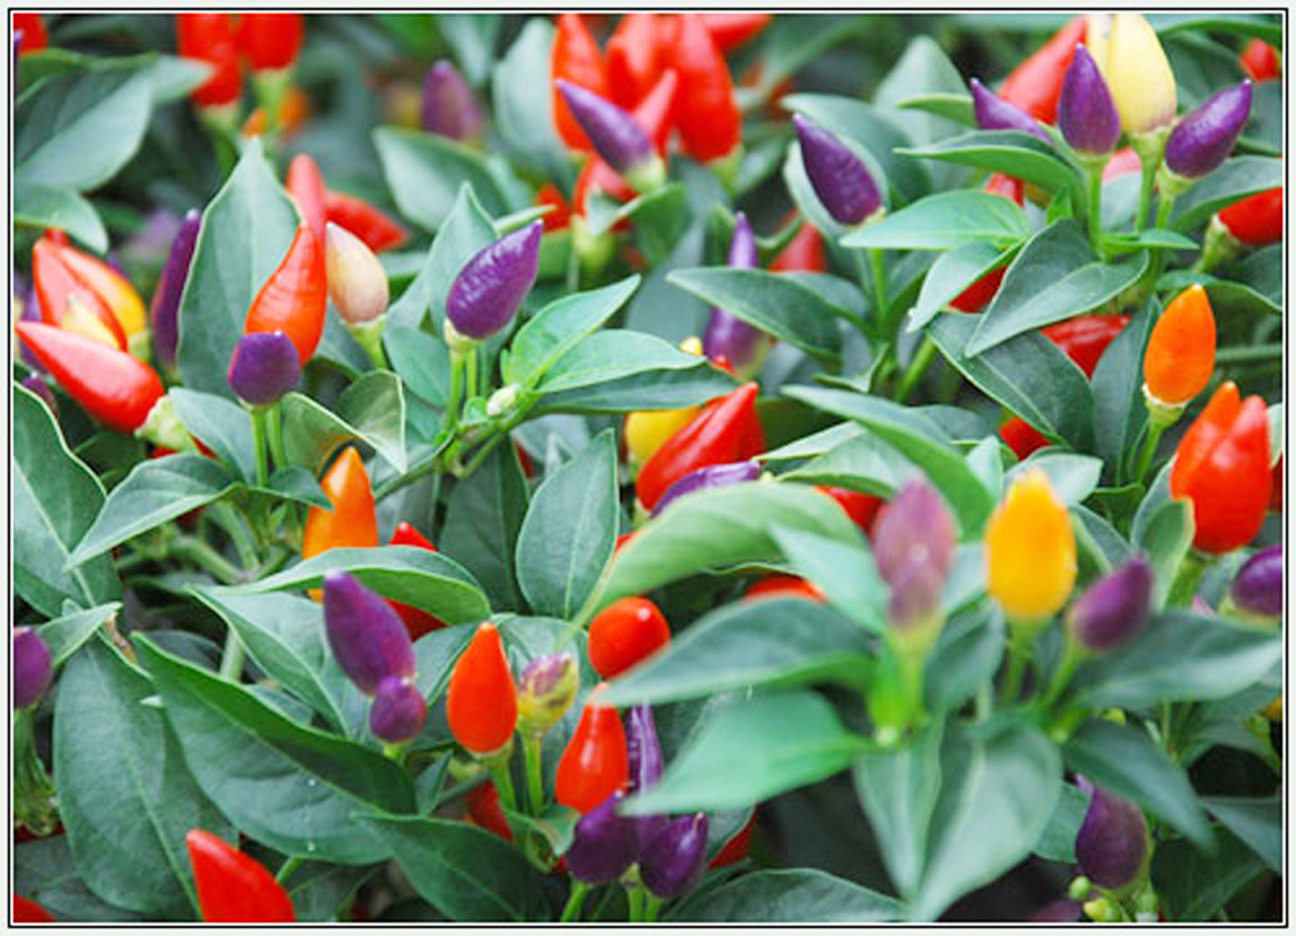 Pepper plants with an ornamental flair – Stabroek News